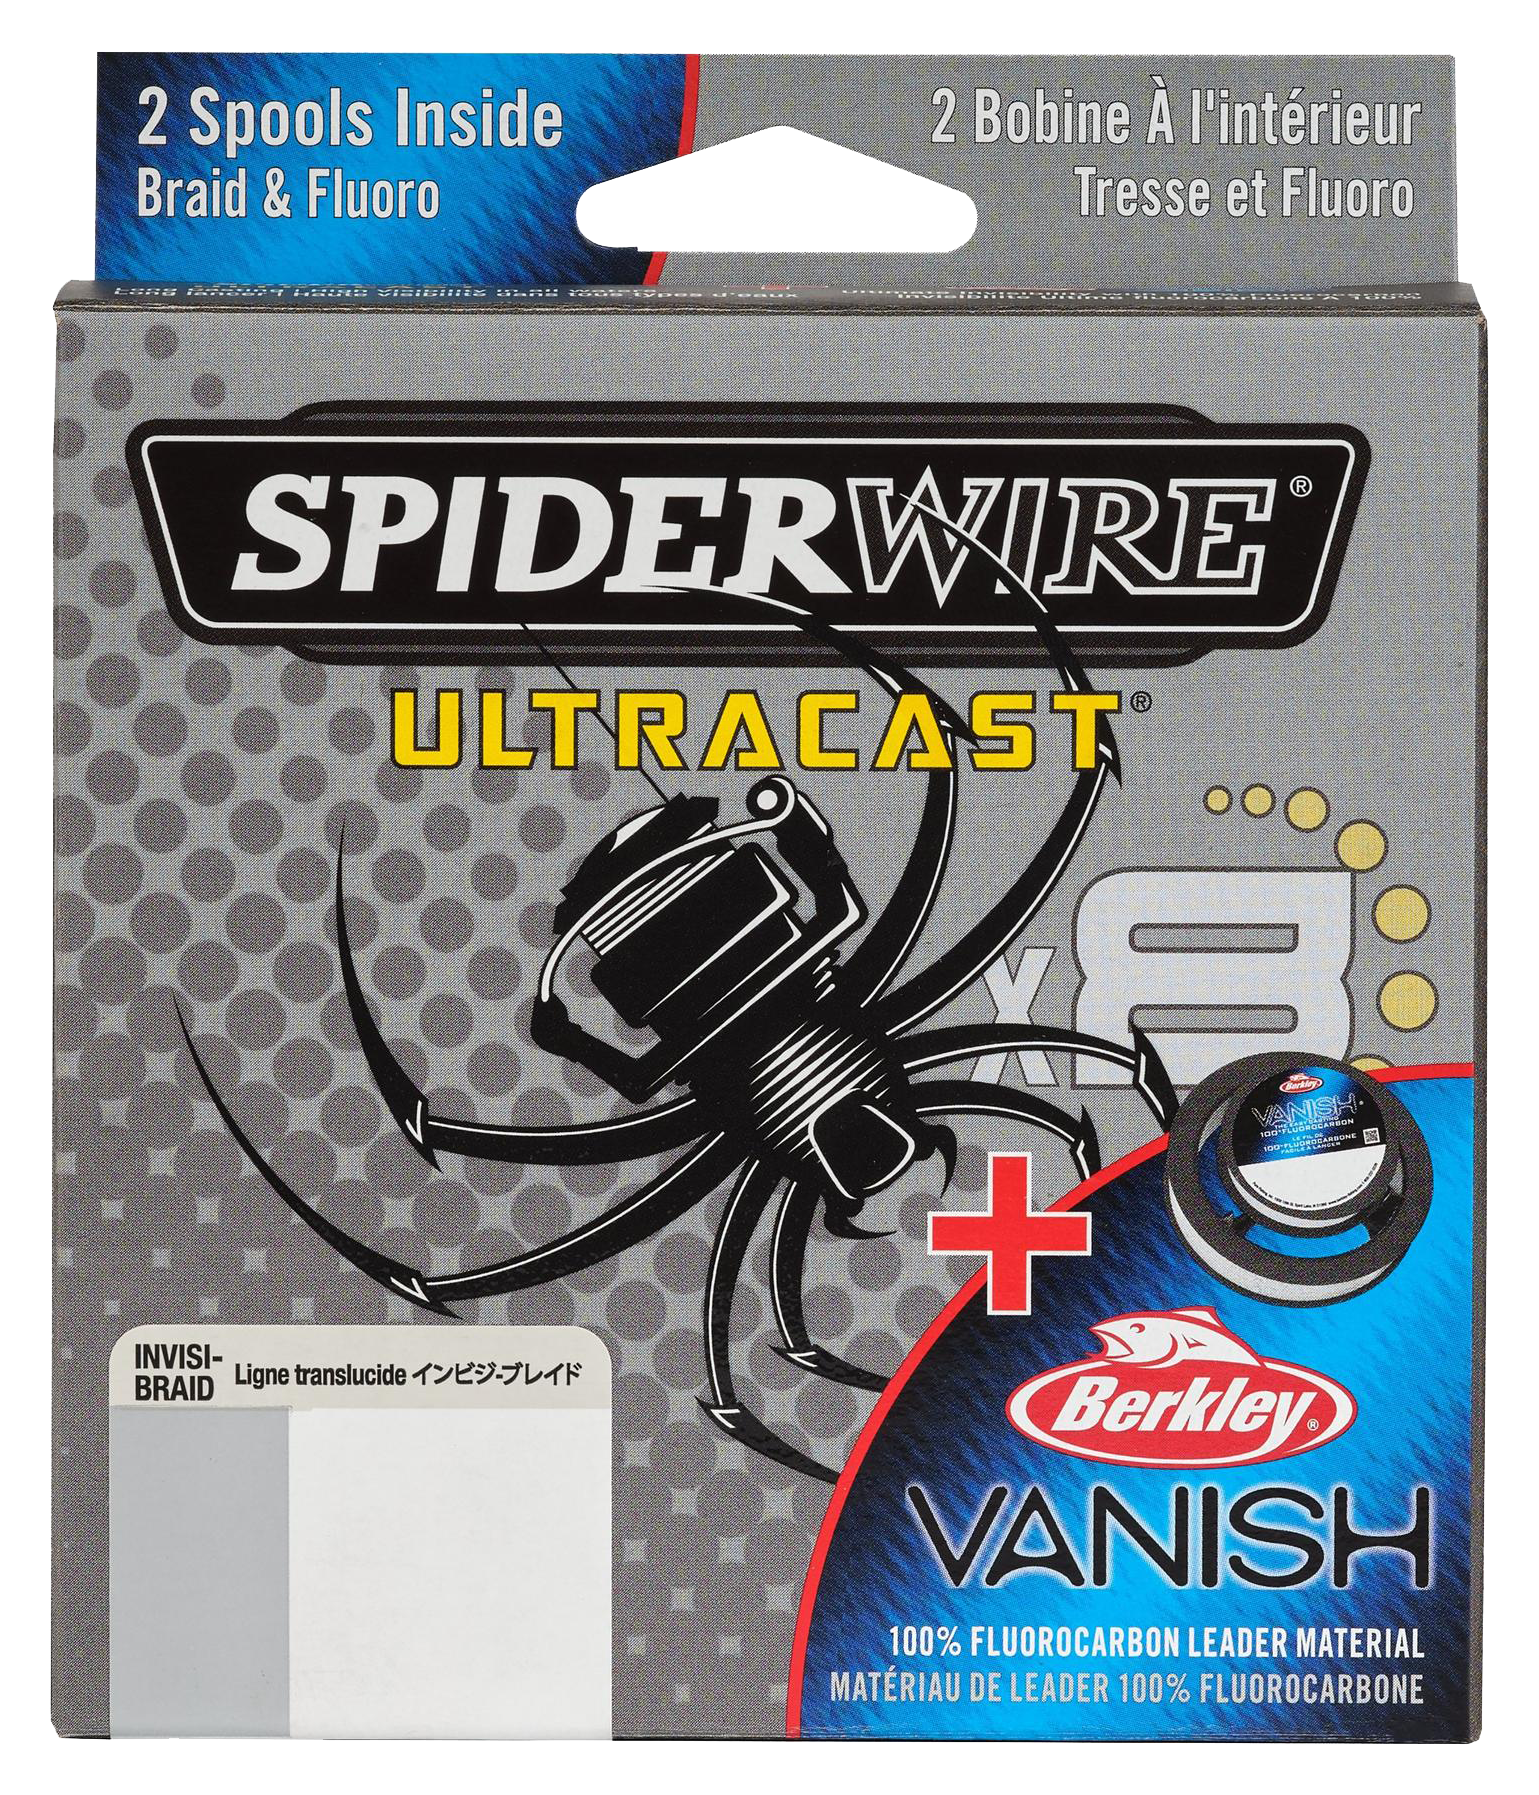 Spiderwire Ultracast/Berkley Vanish Dual Spool Pack